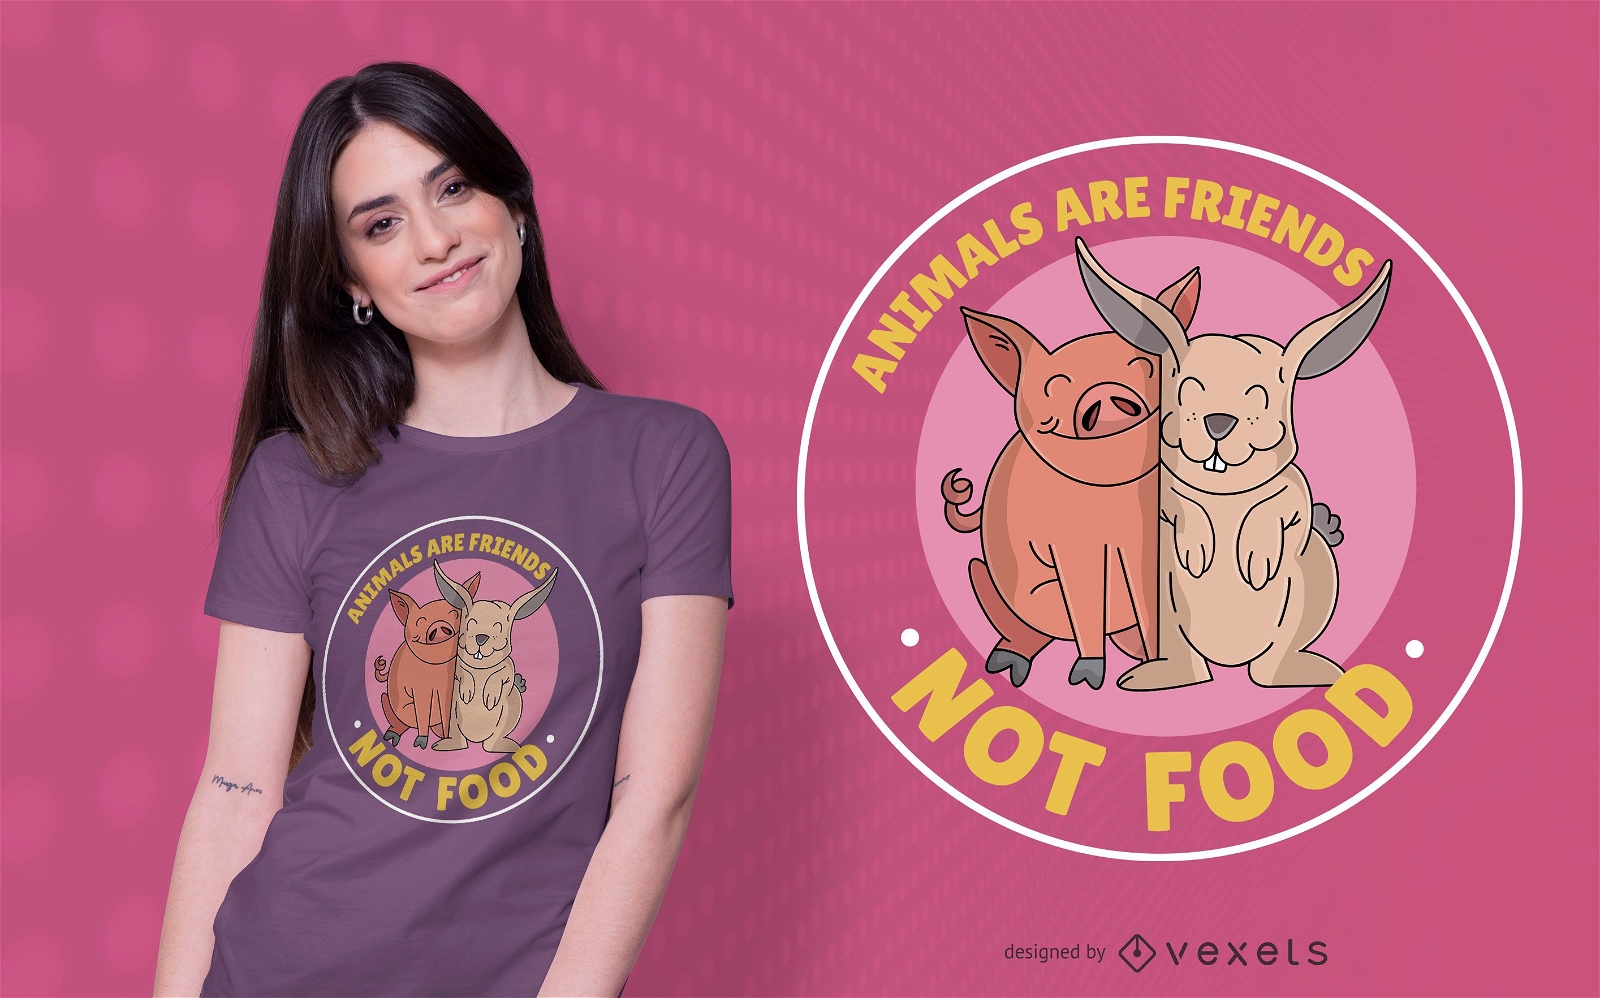 Animais s?o designs de camisetas de amigos